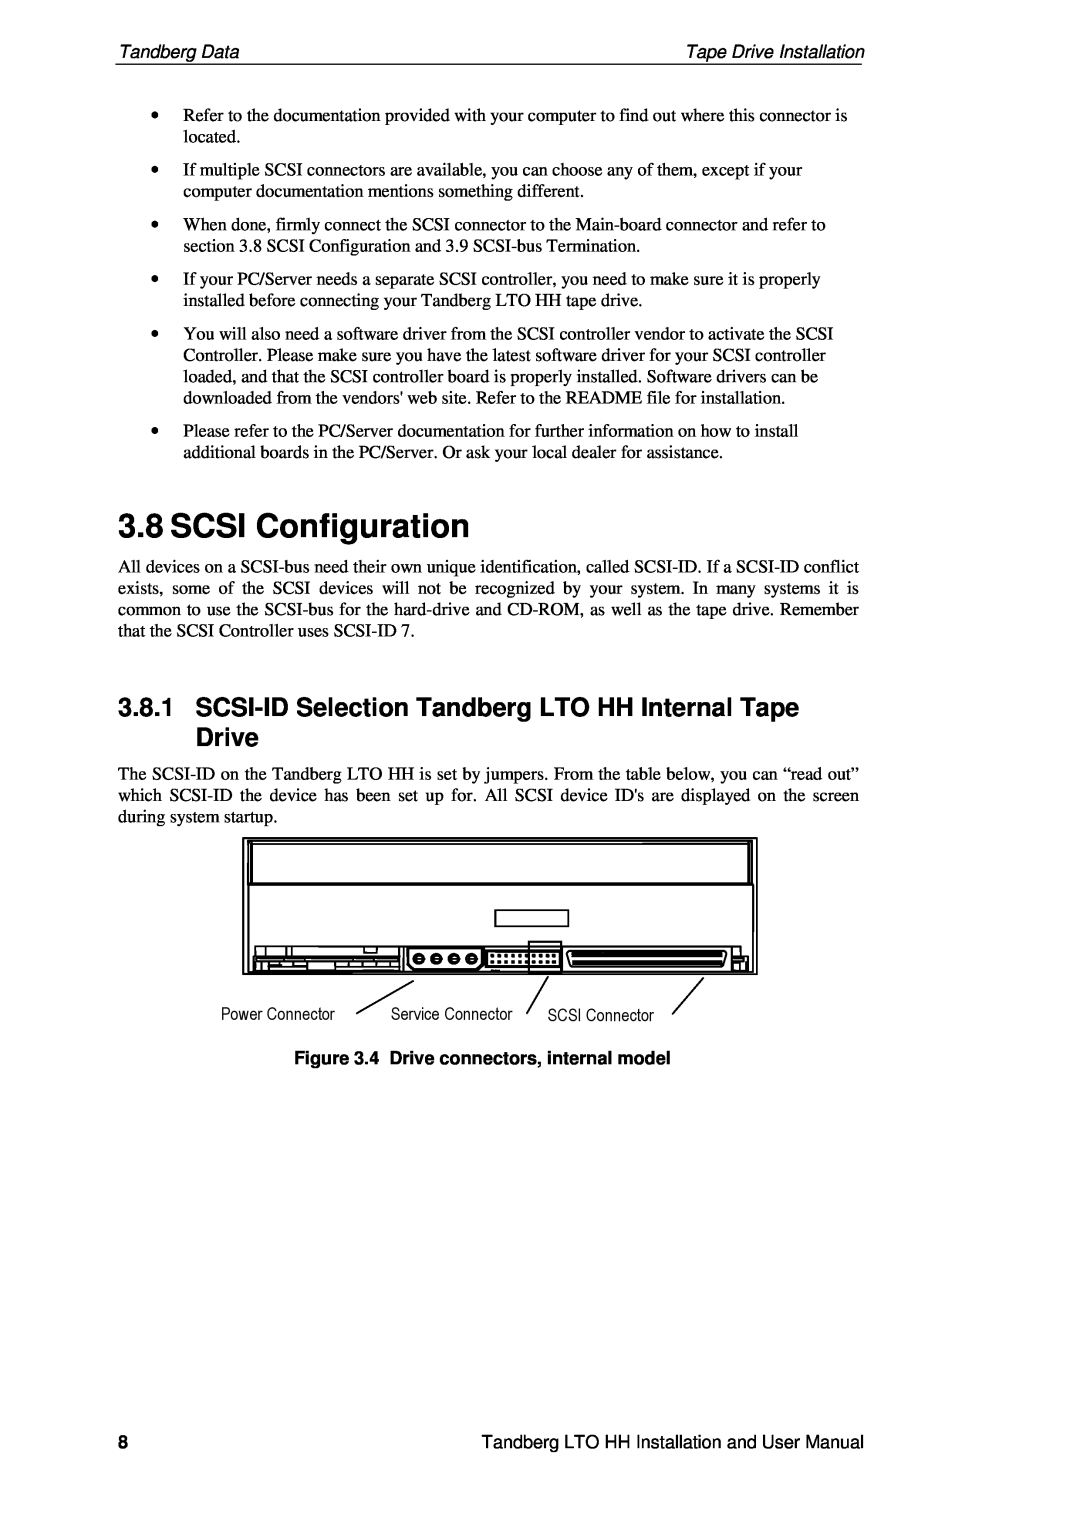 Tandberg Data LTO-3 HH SCSI Configuration, 4 Drive connectors, internal model, Tandberg Data, Tape Drive Installation 